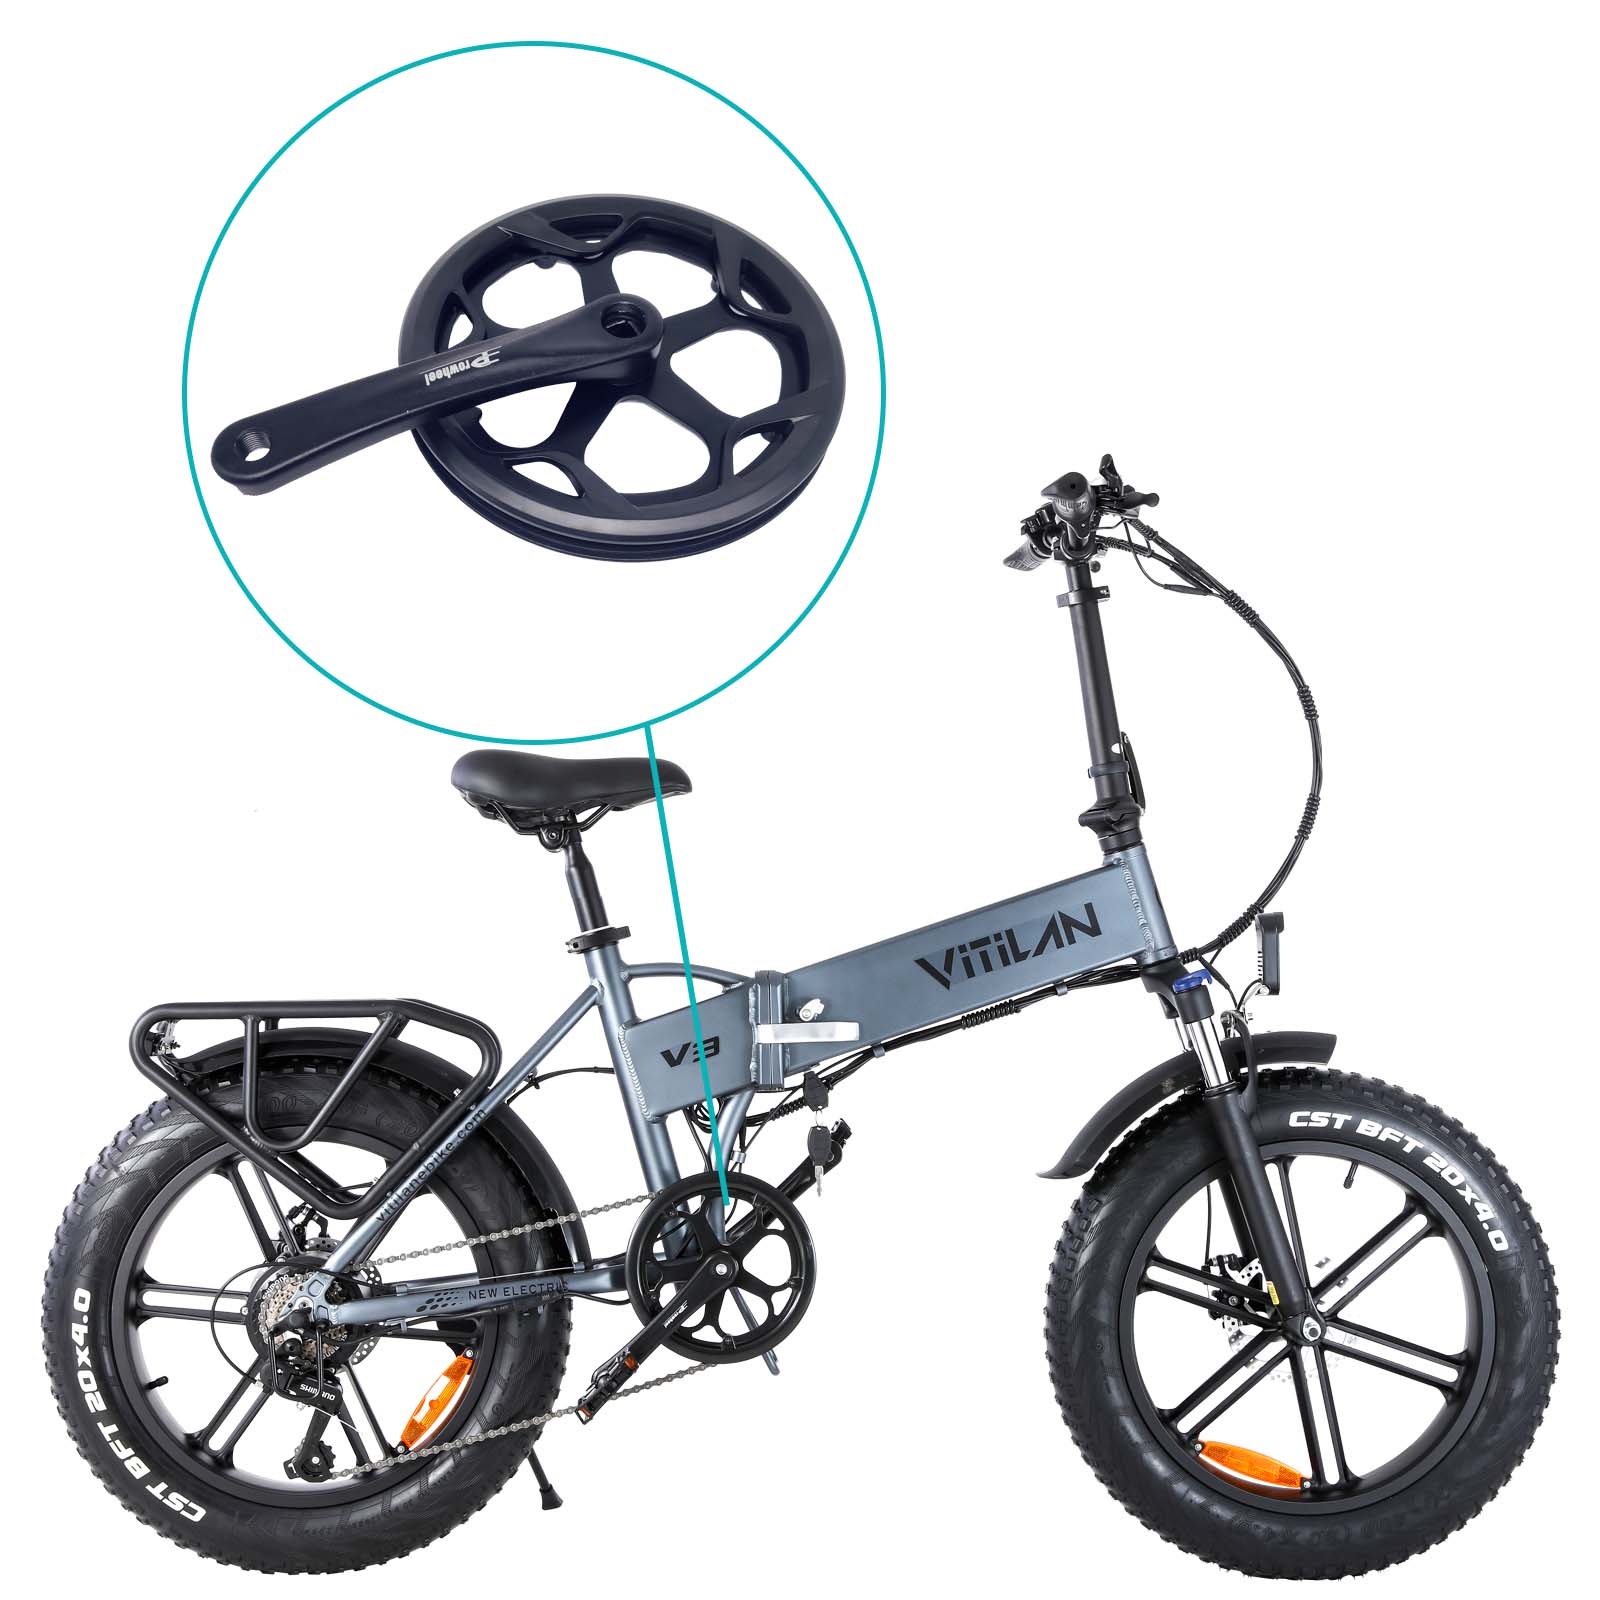 Electric Bike Aluminum Alloy Crankset, Suitable for Vitilan V3